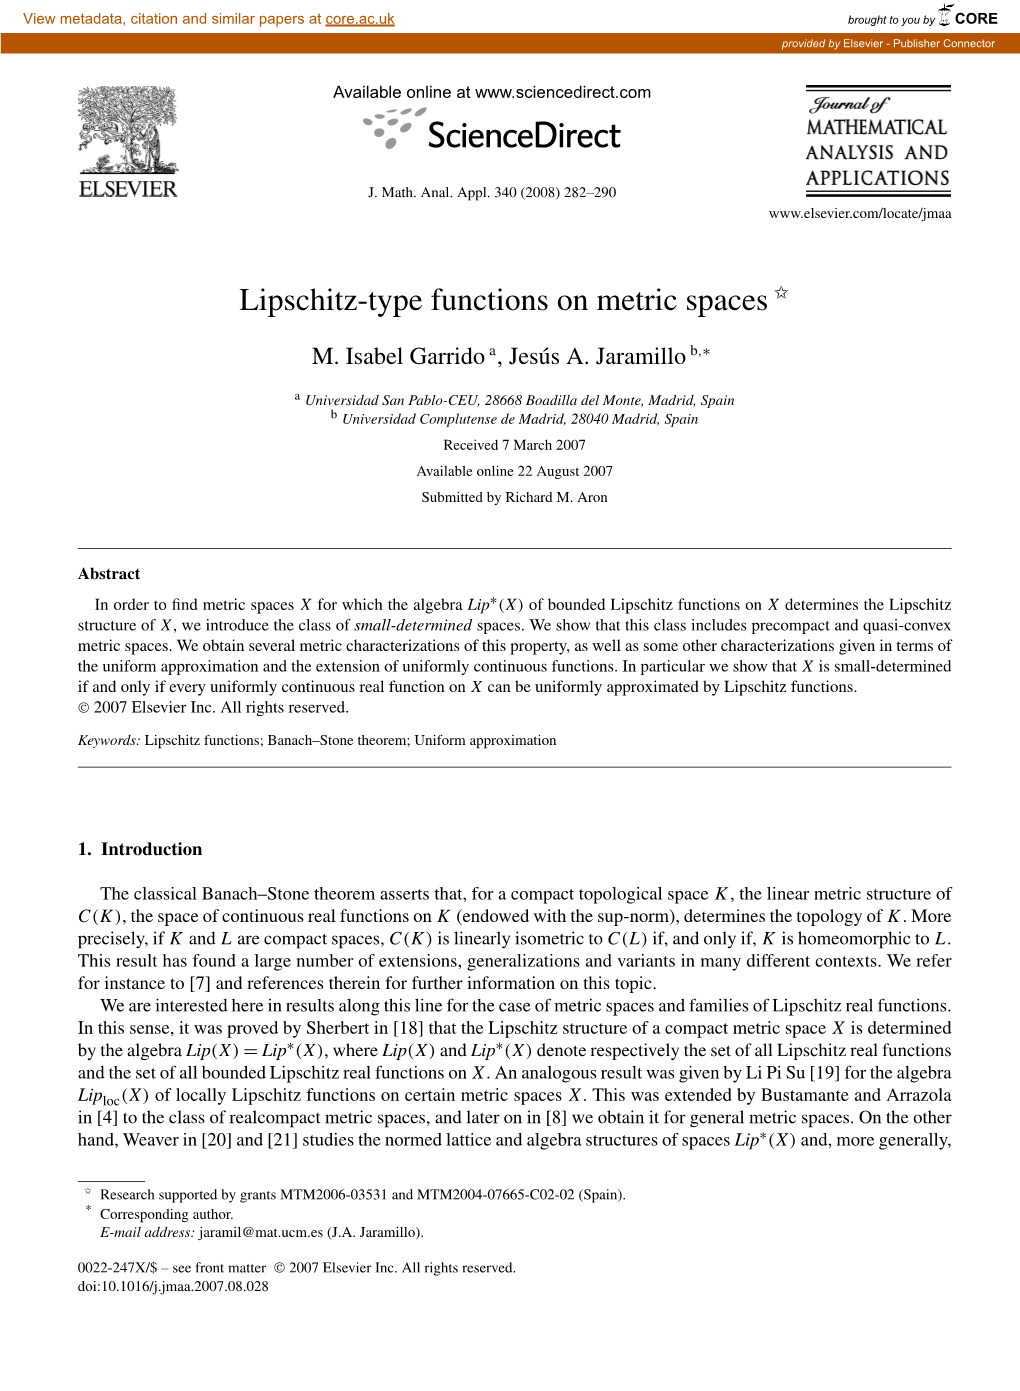 Lipschitz-Type Functions on Metric Spaces ✩